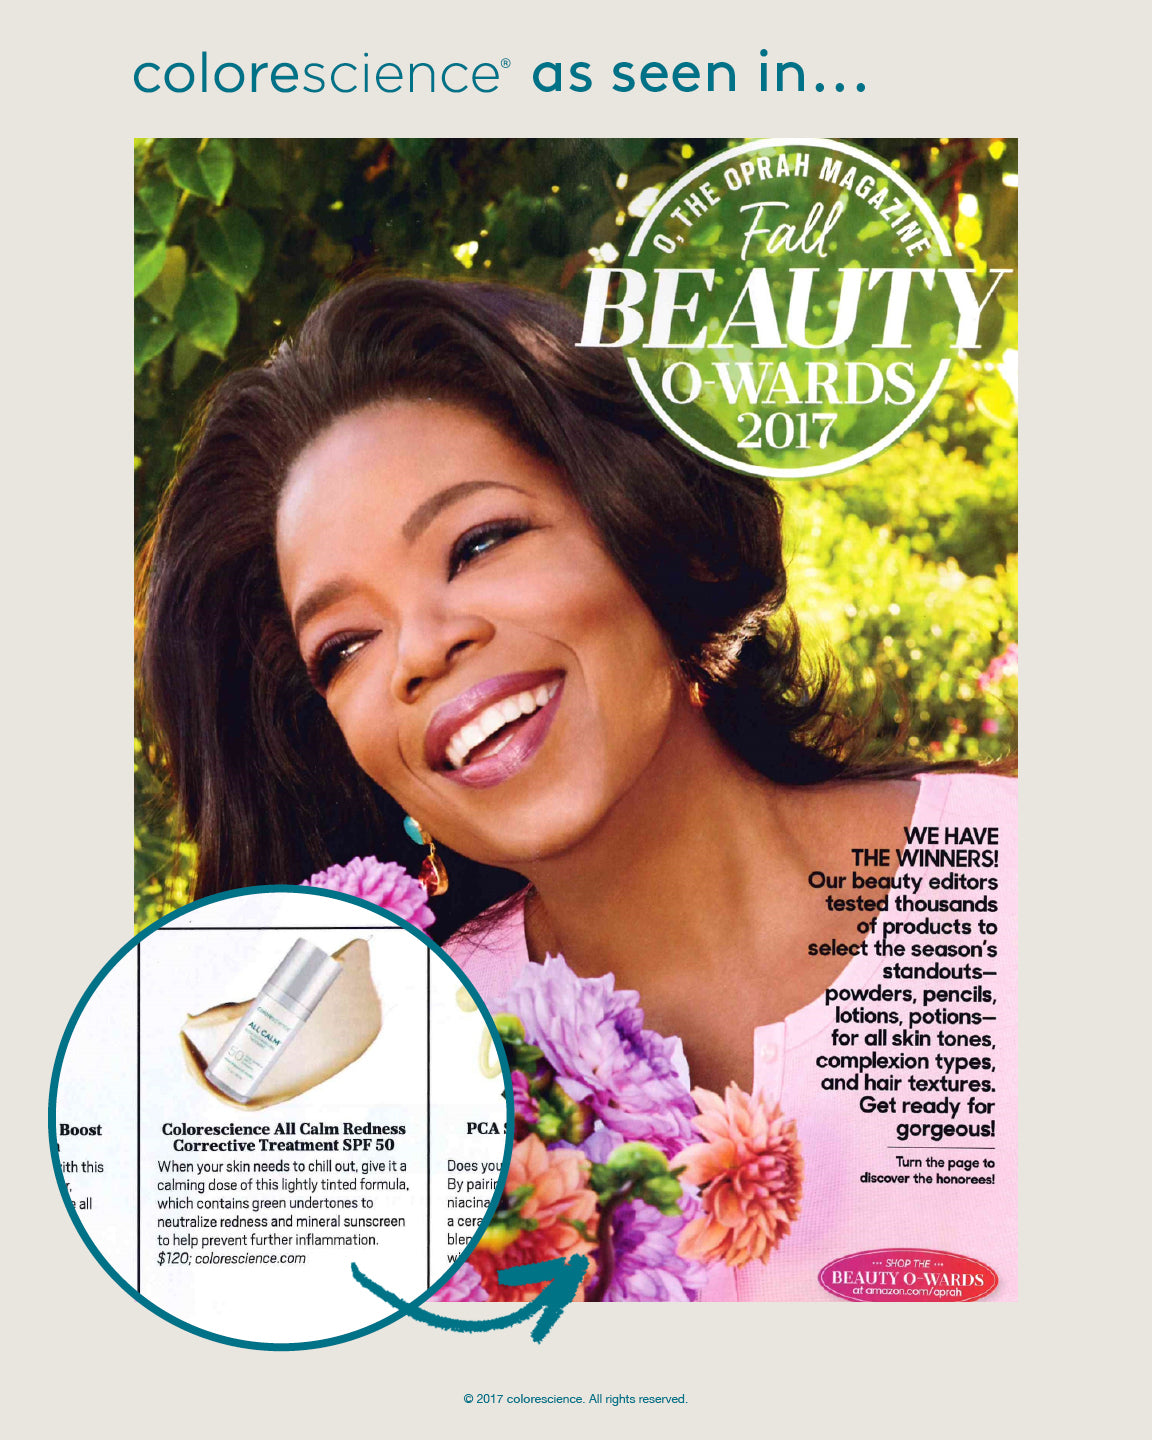 Oprah magazine cover featuring Colorescience